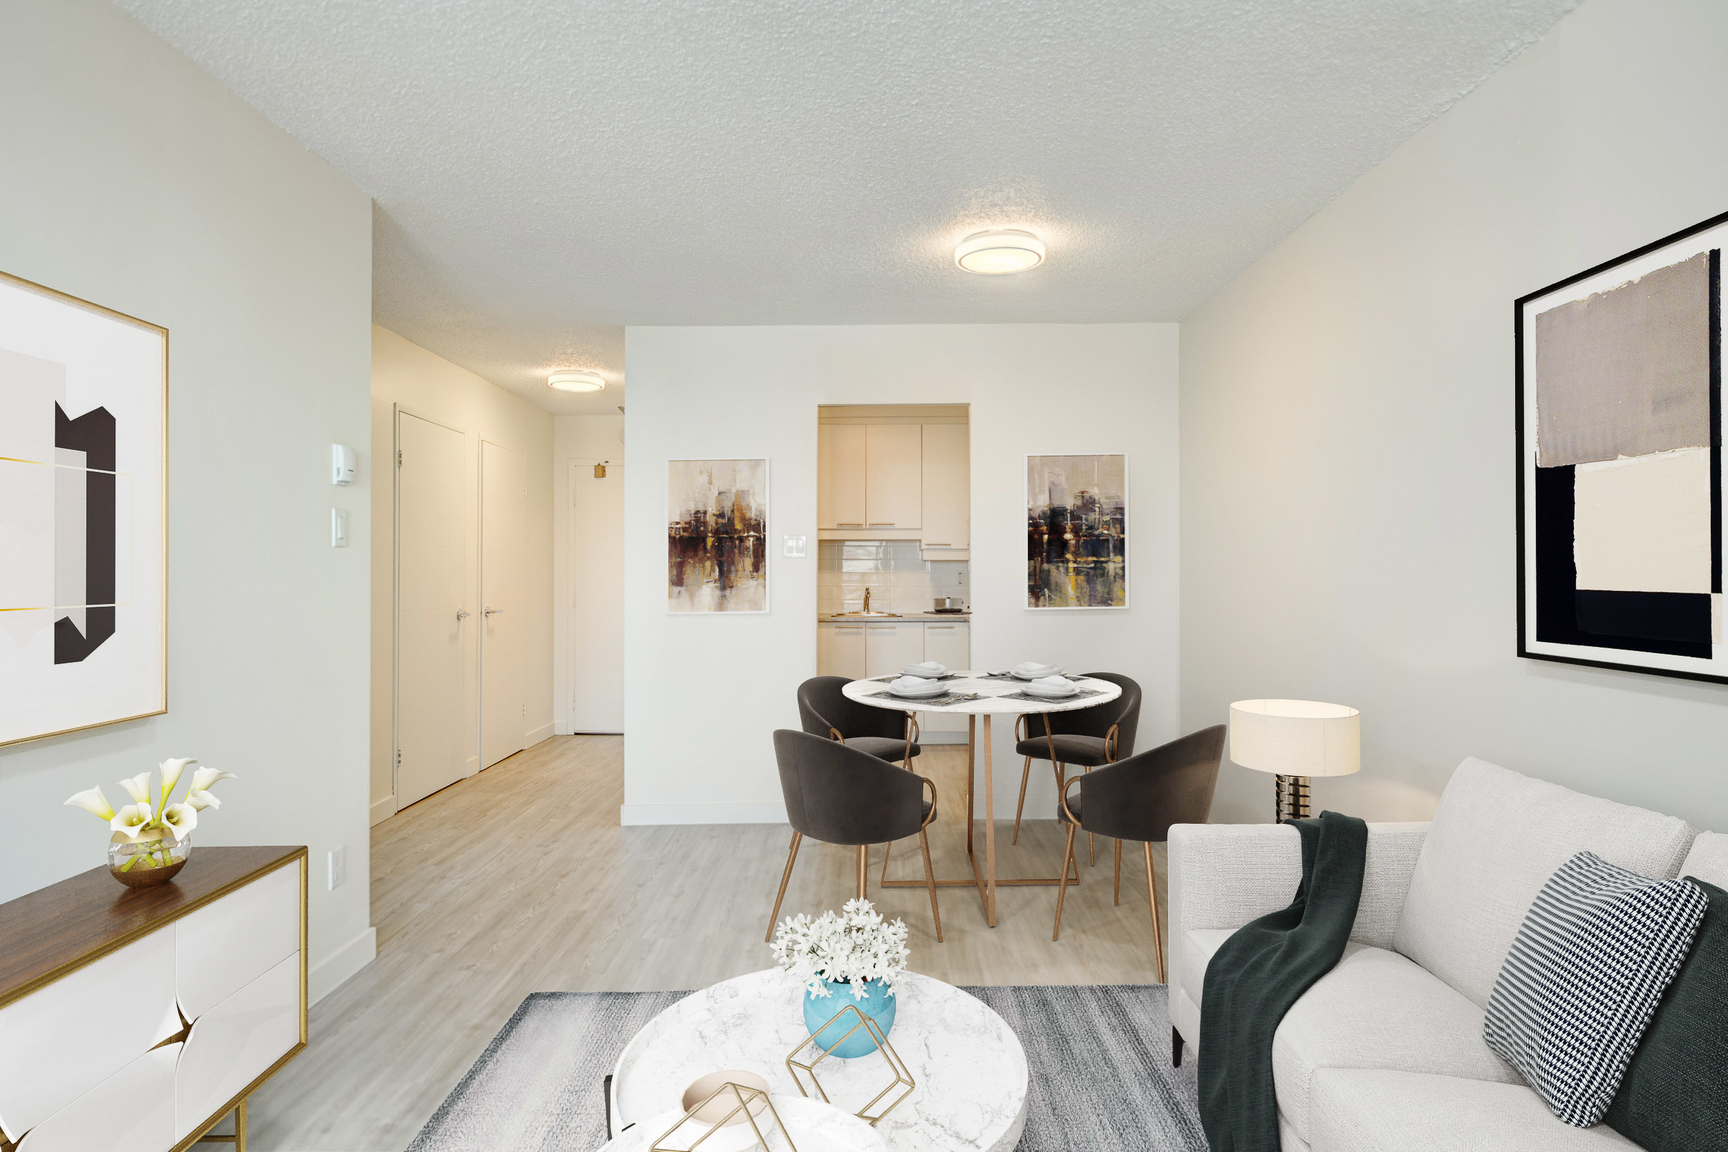 1 bedroom Apartments for rent in Laval at Le Quatre Cent - Photo 01 - RentQuebecApartments – L407184